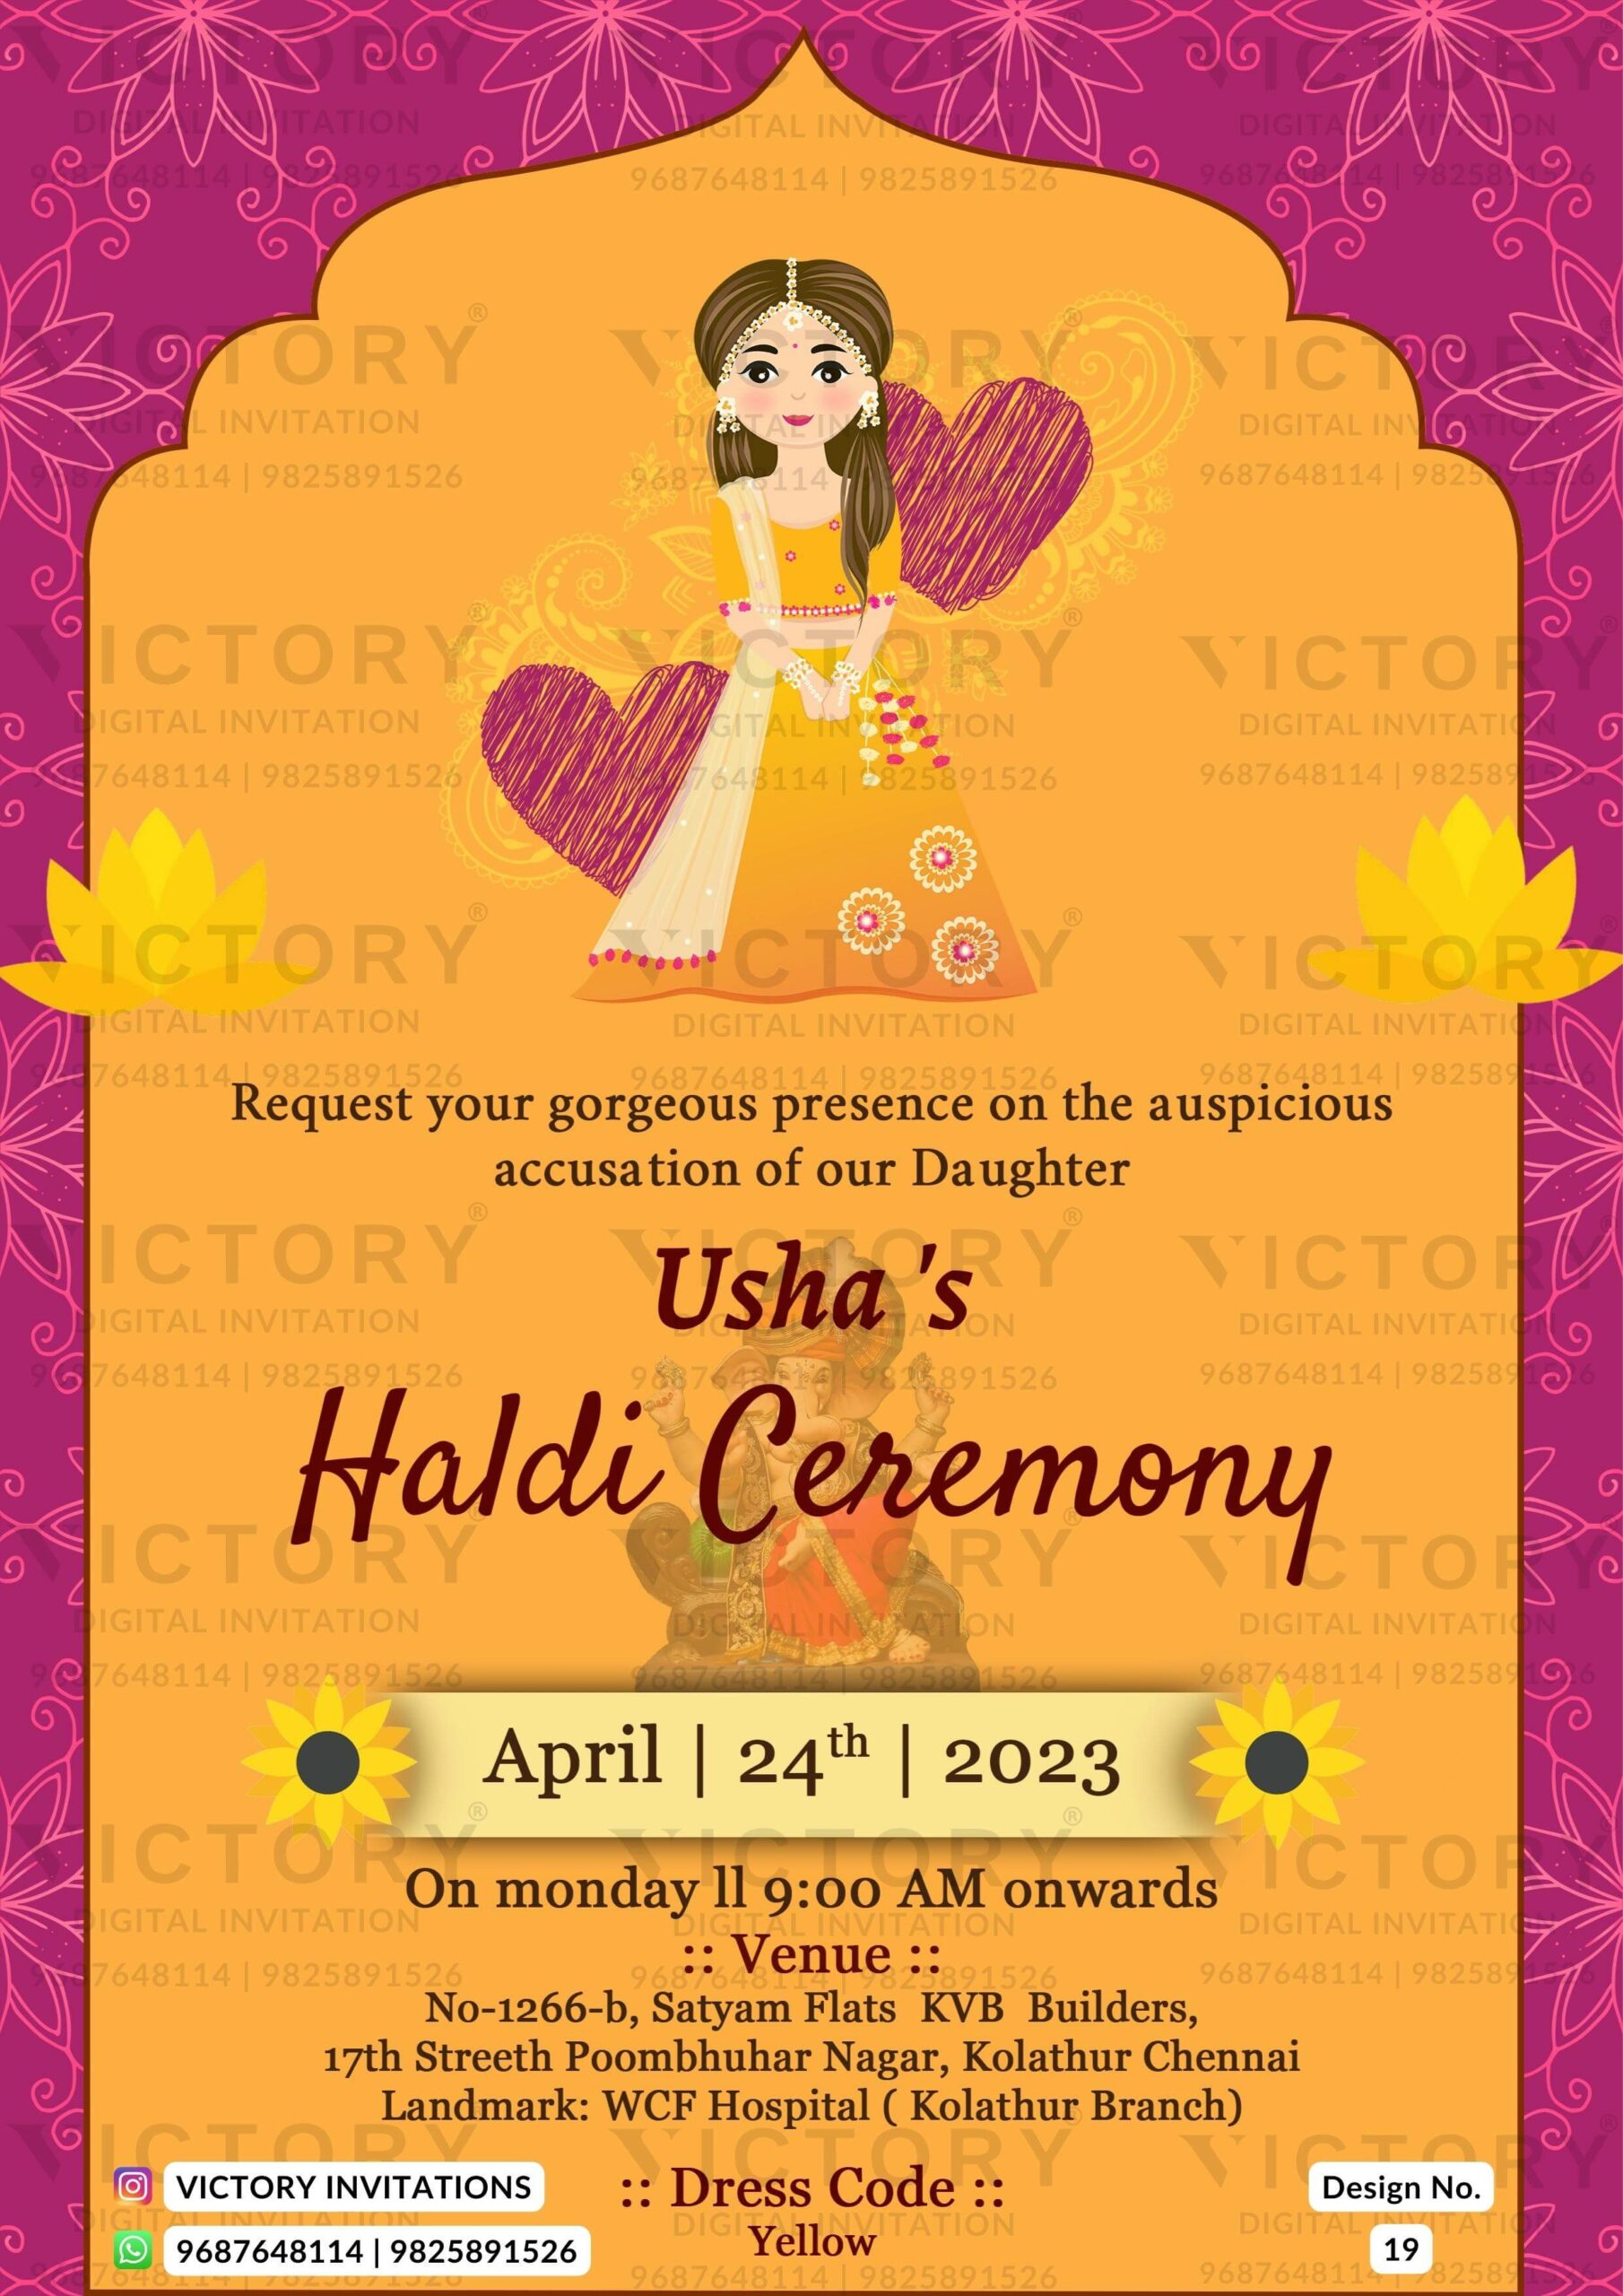 haldi ceremony digital invitation card design number 19